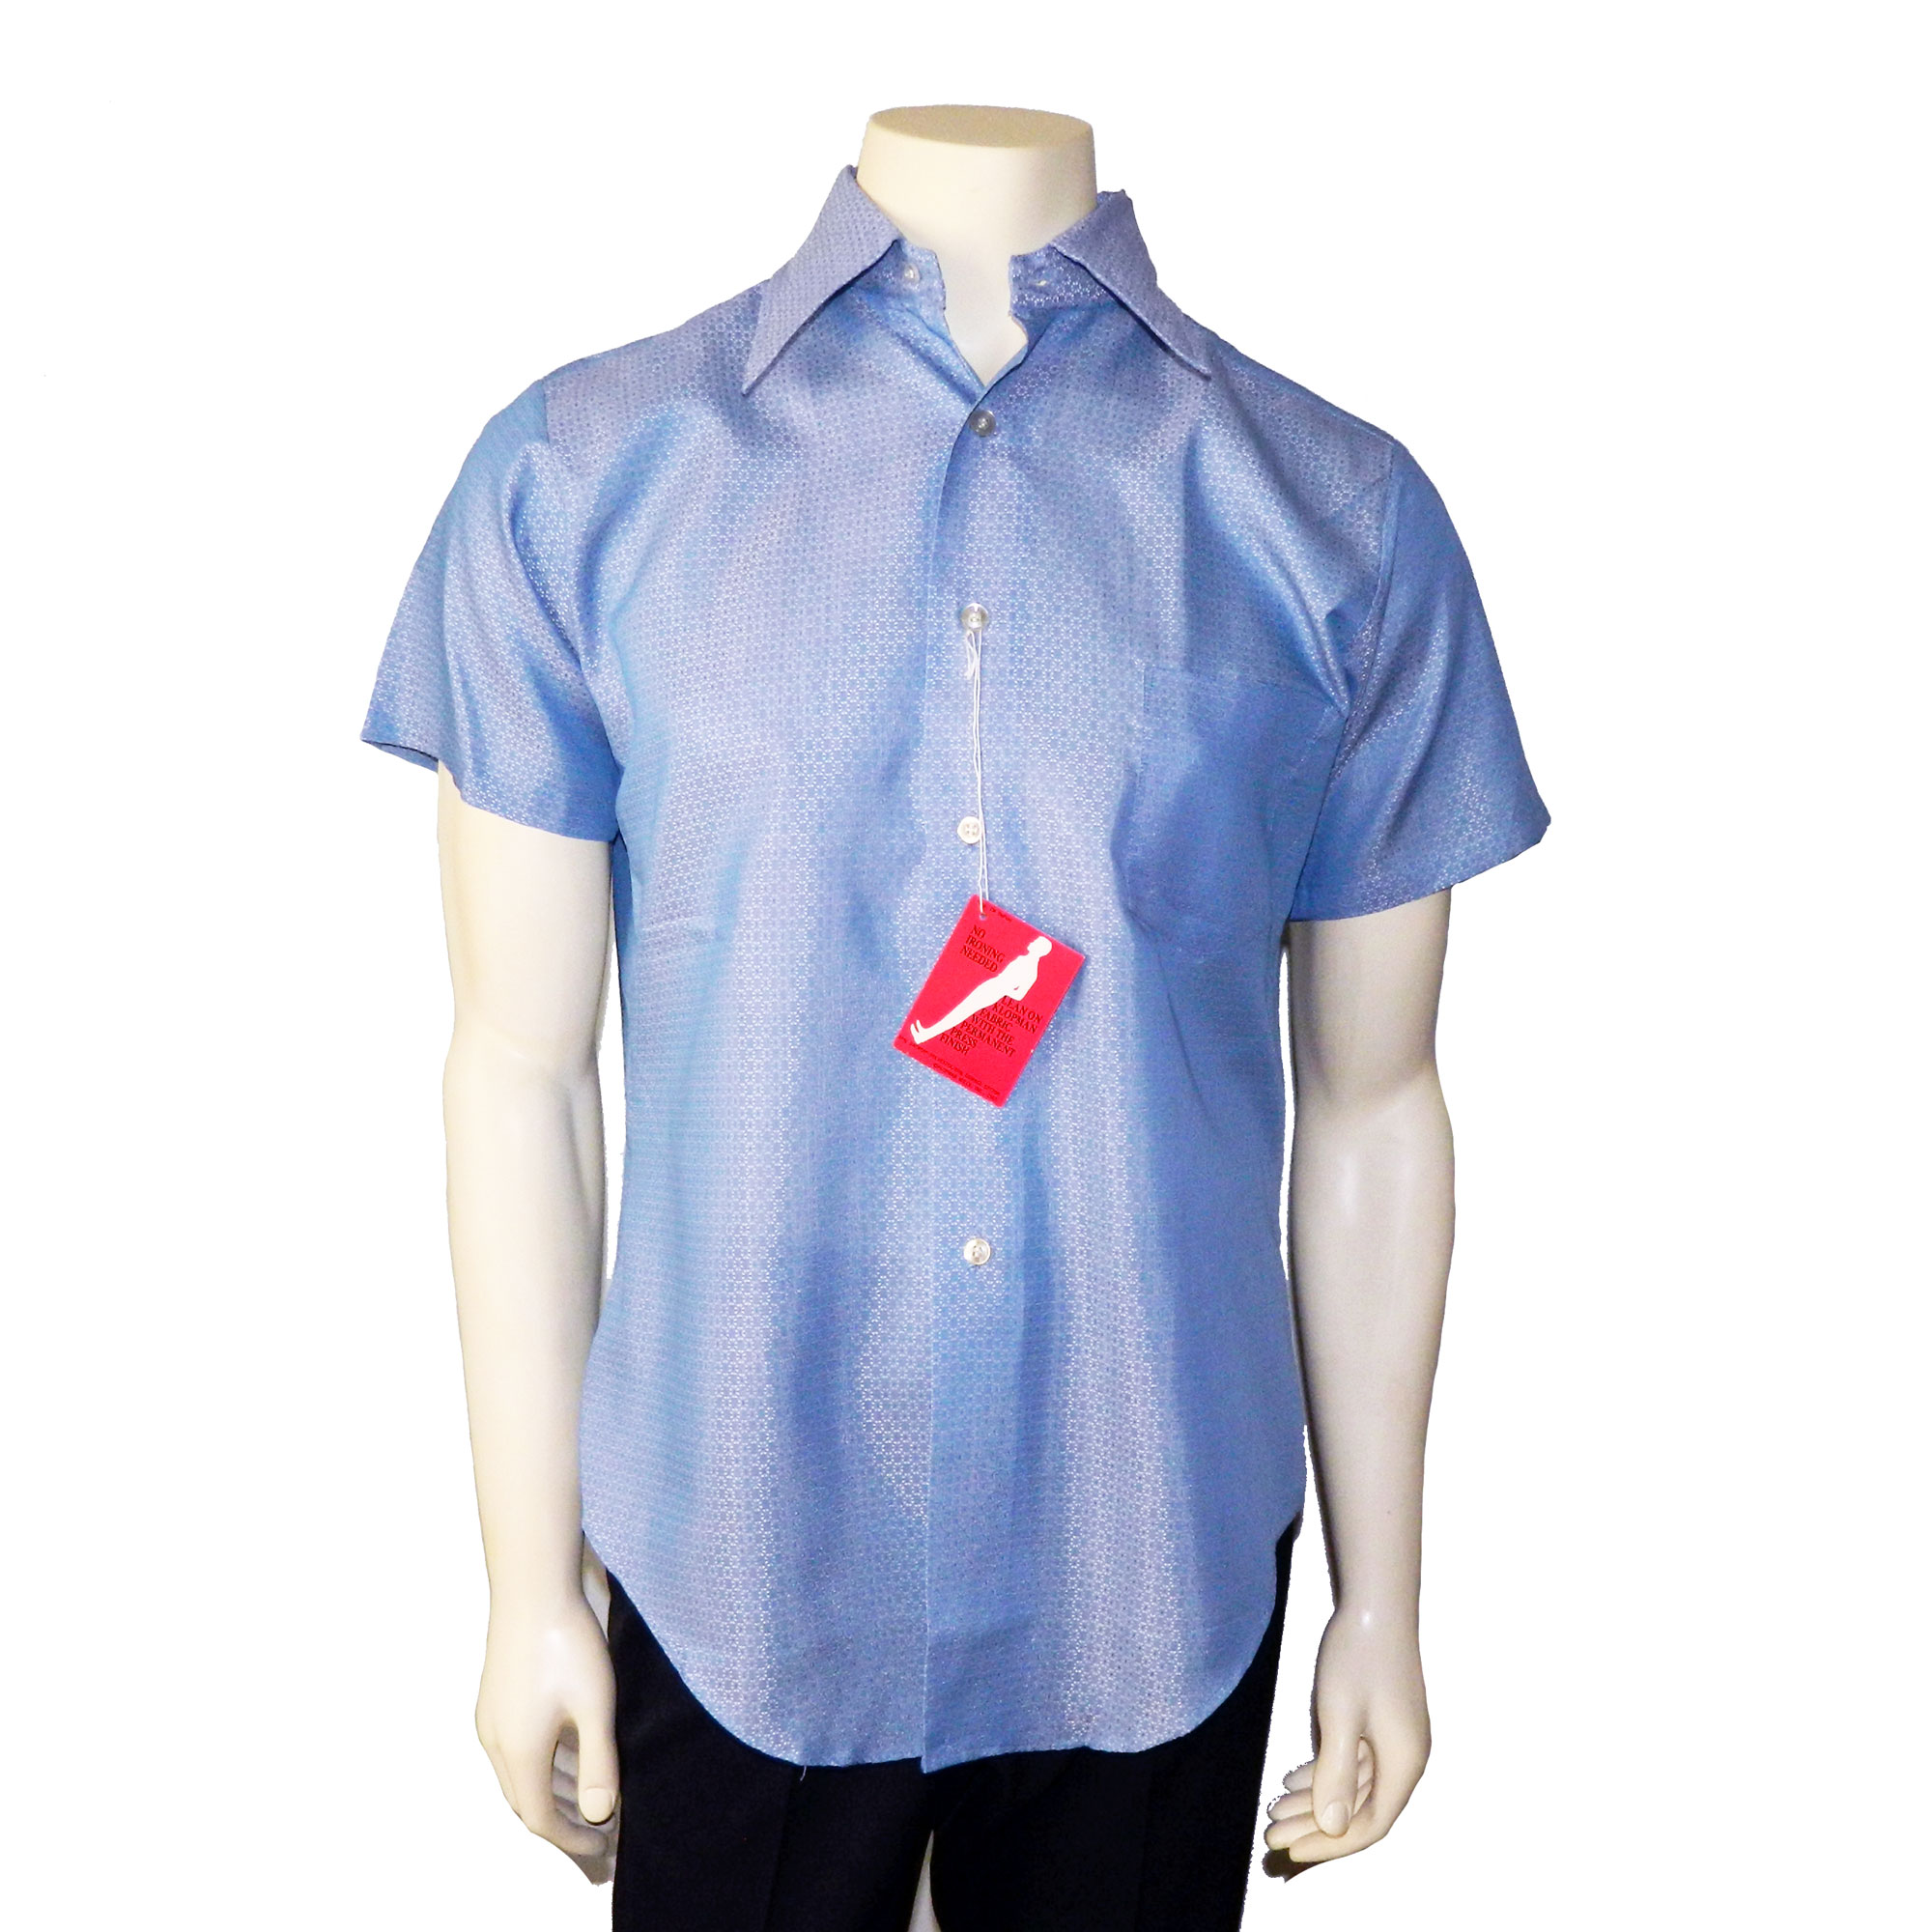 1960s short sleeve shirt